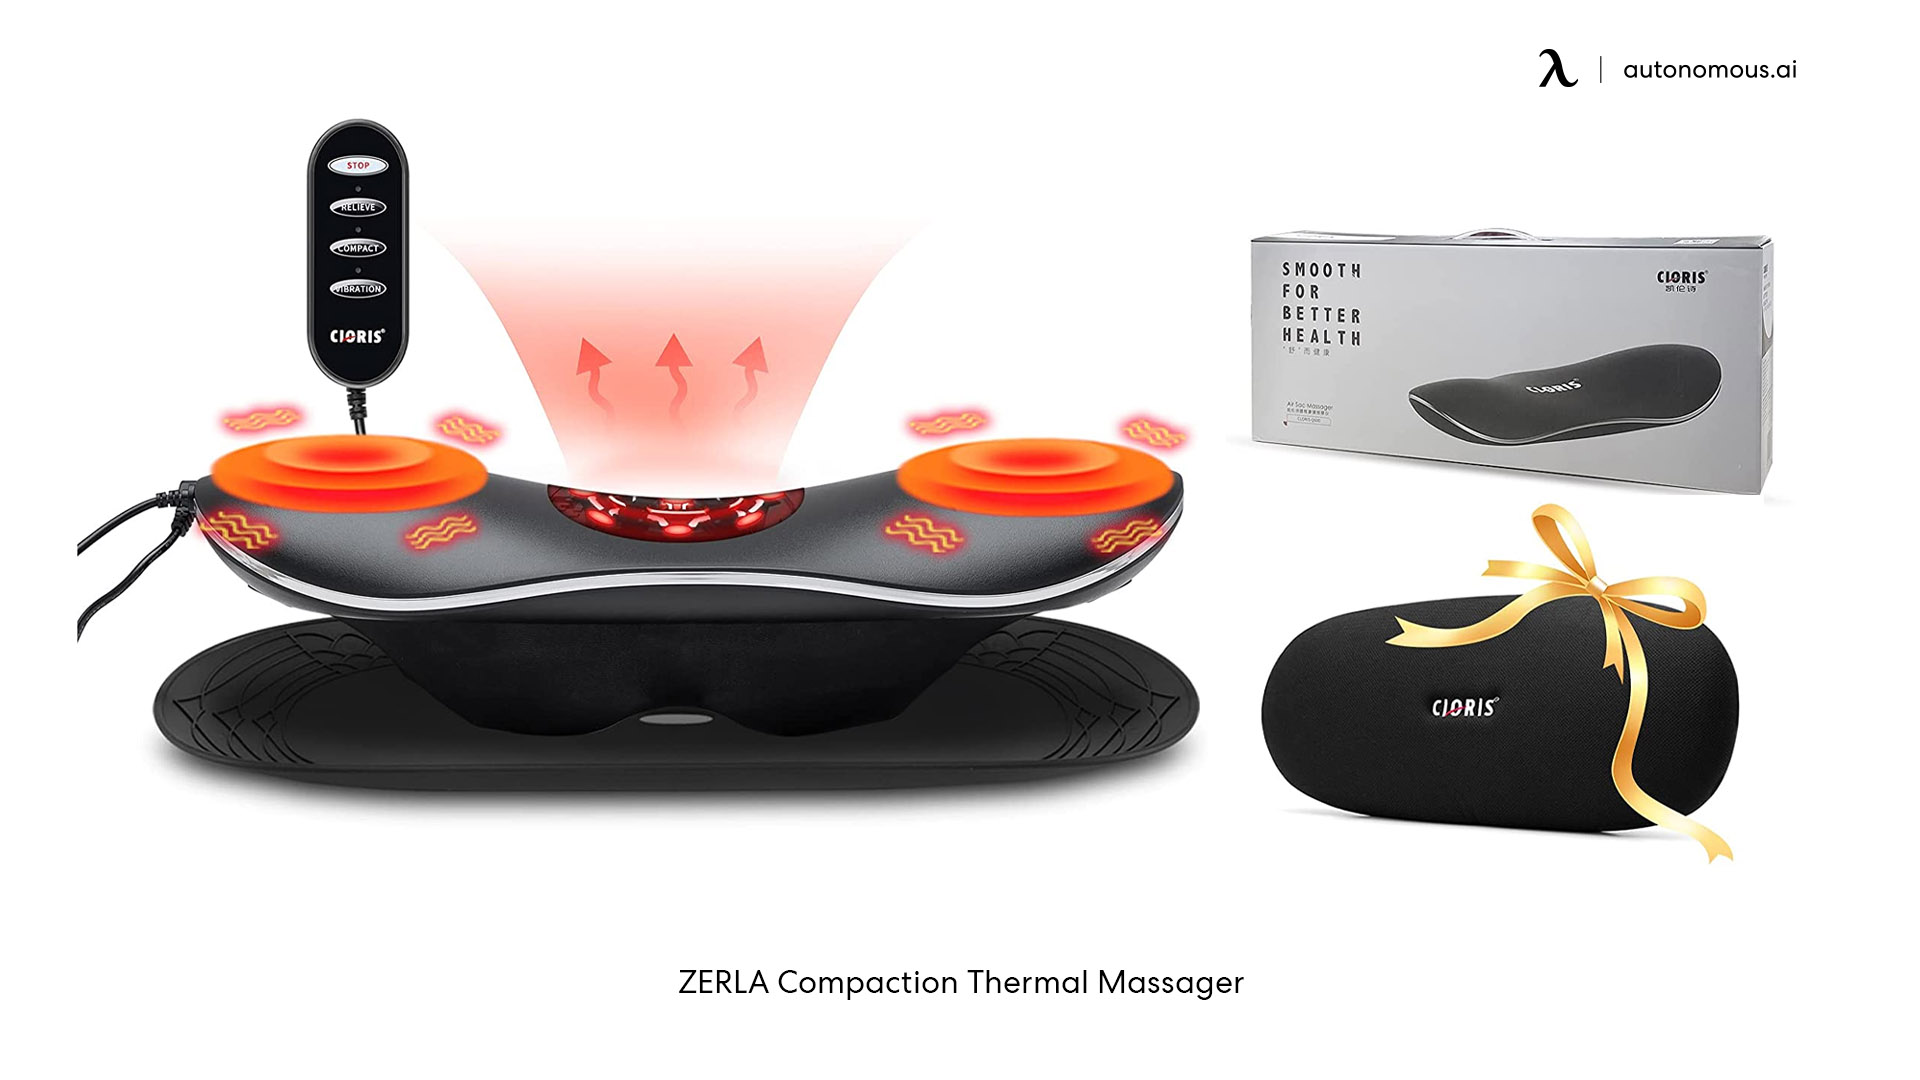 ZERLA Compaction Thermal Massager